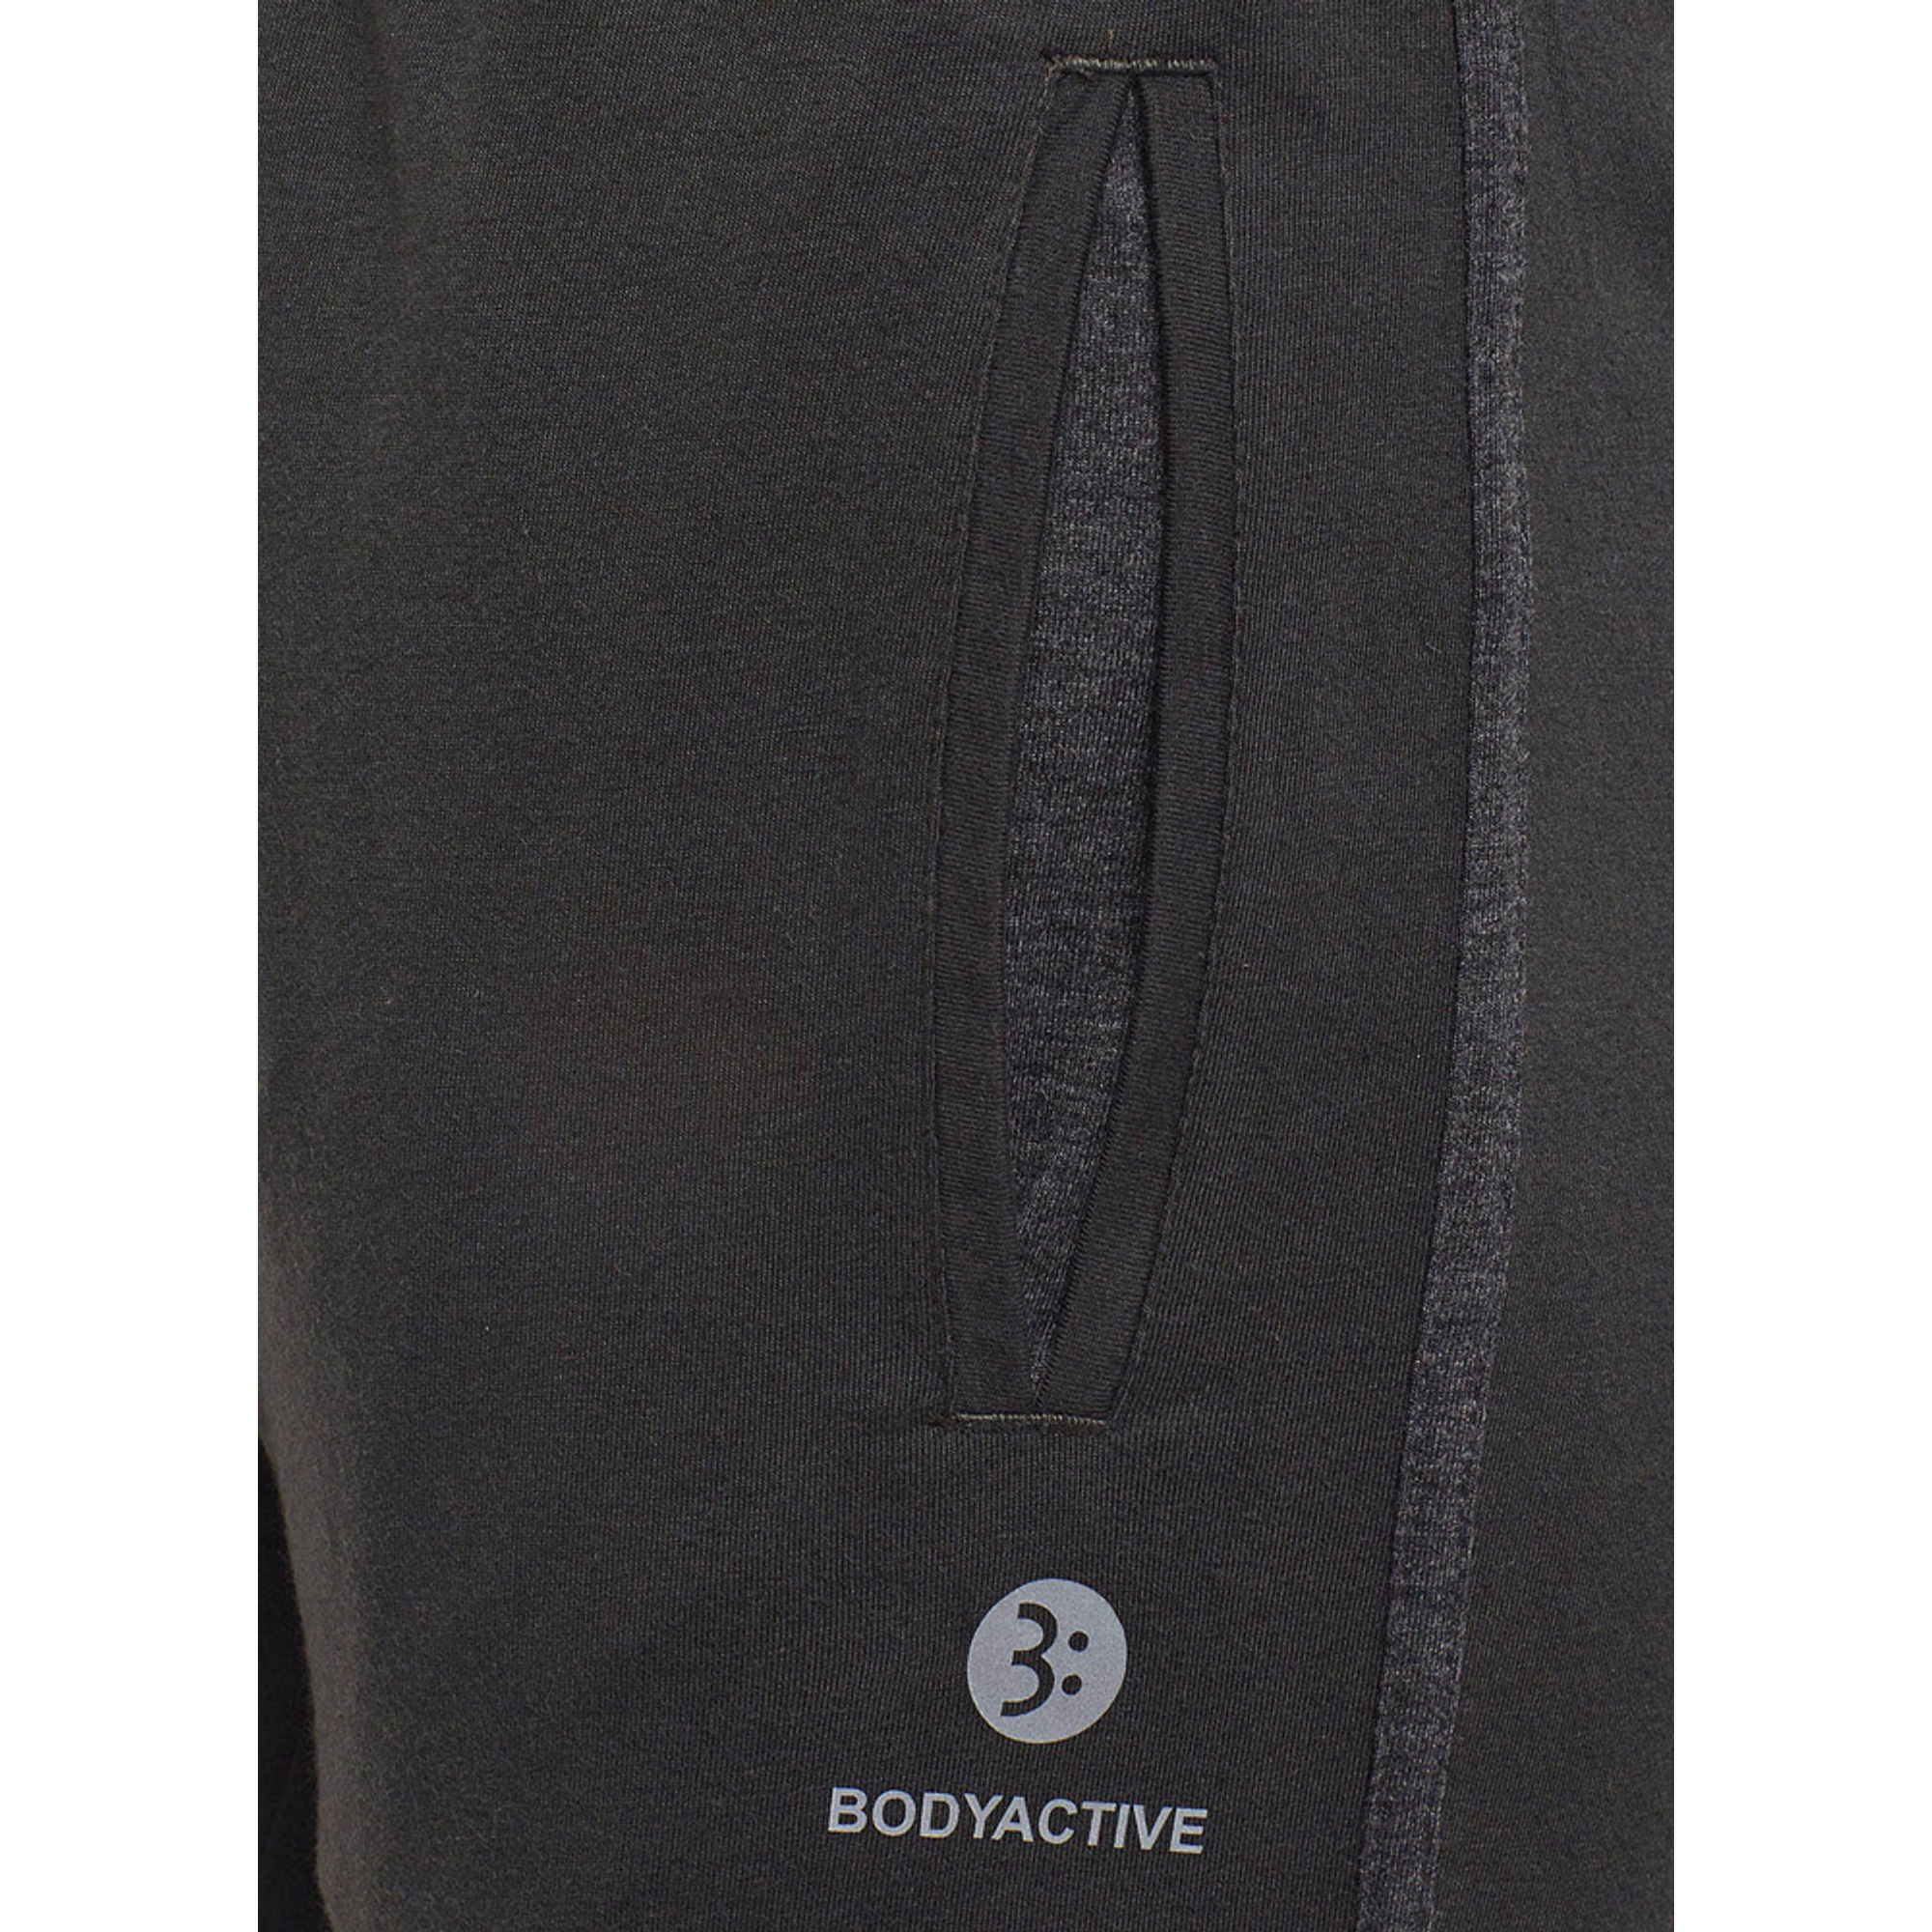 Buy Bodycare Bodyactive Navy Blue Color Women'S Active Pant online